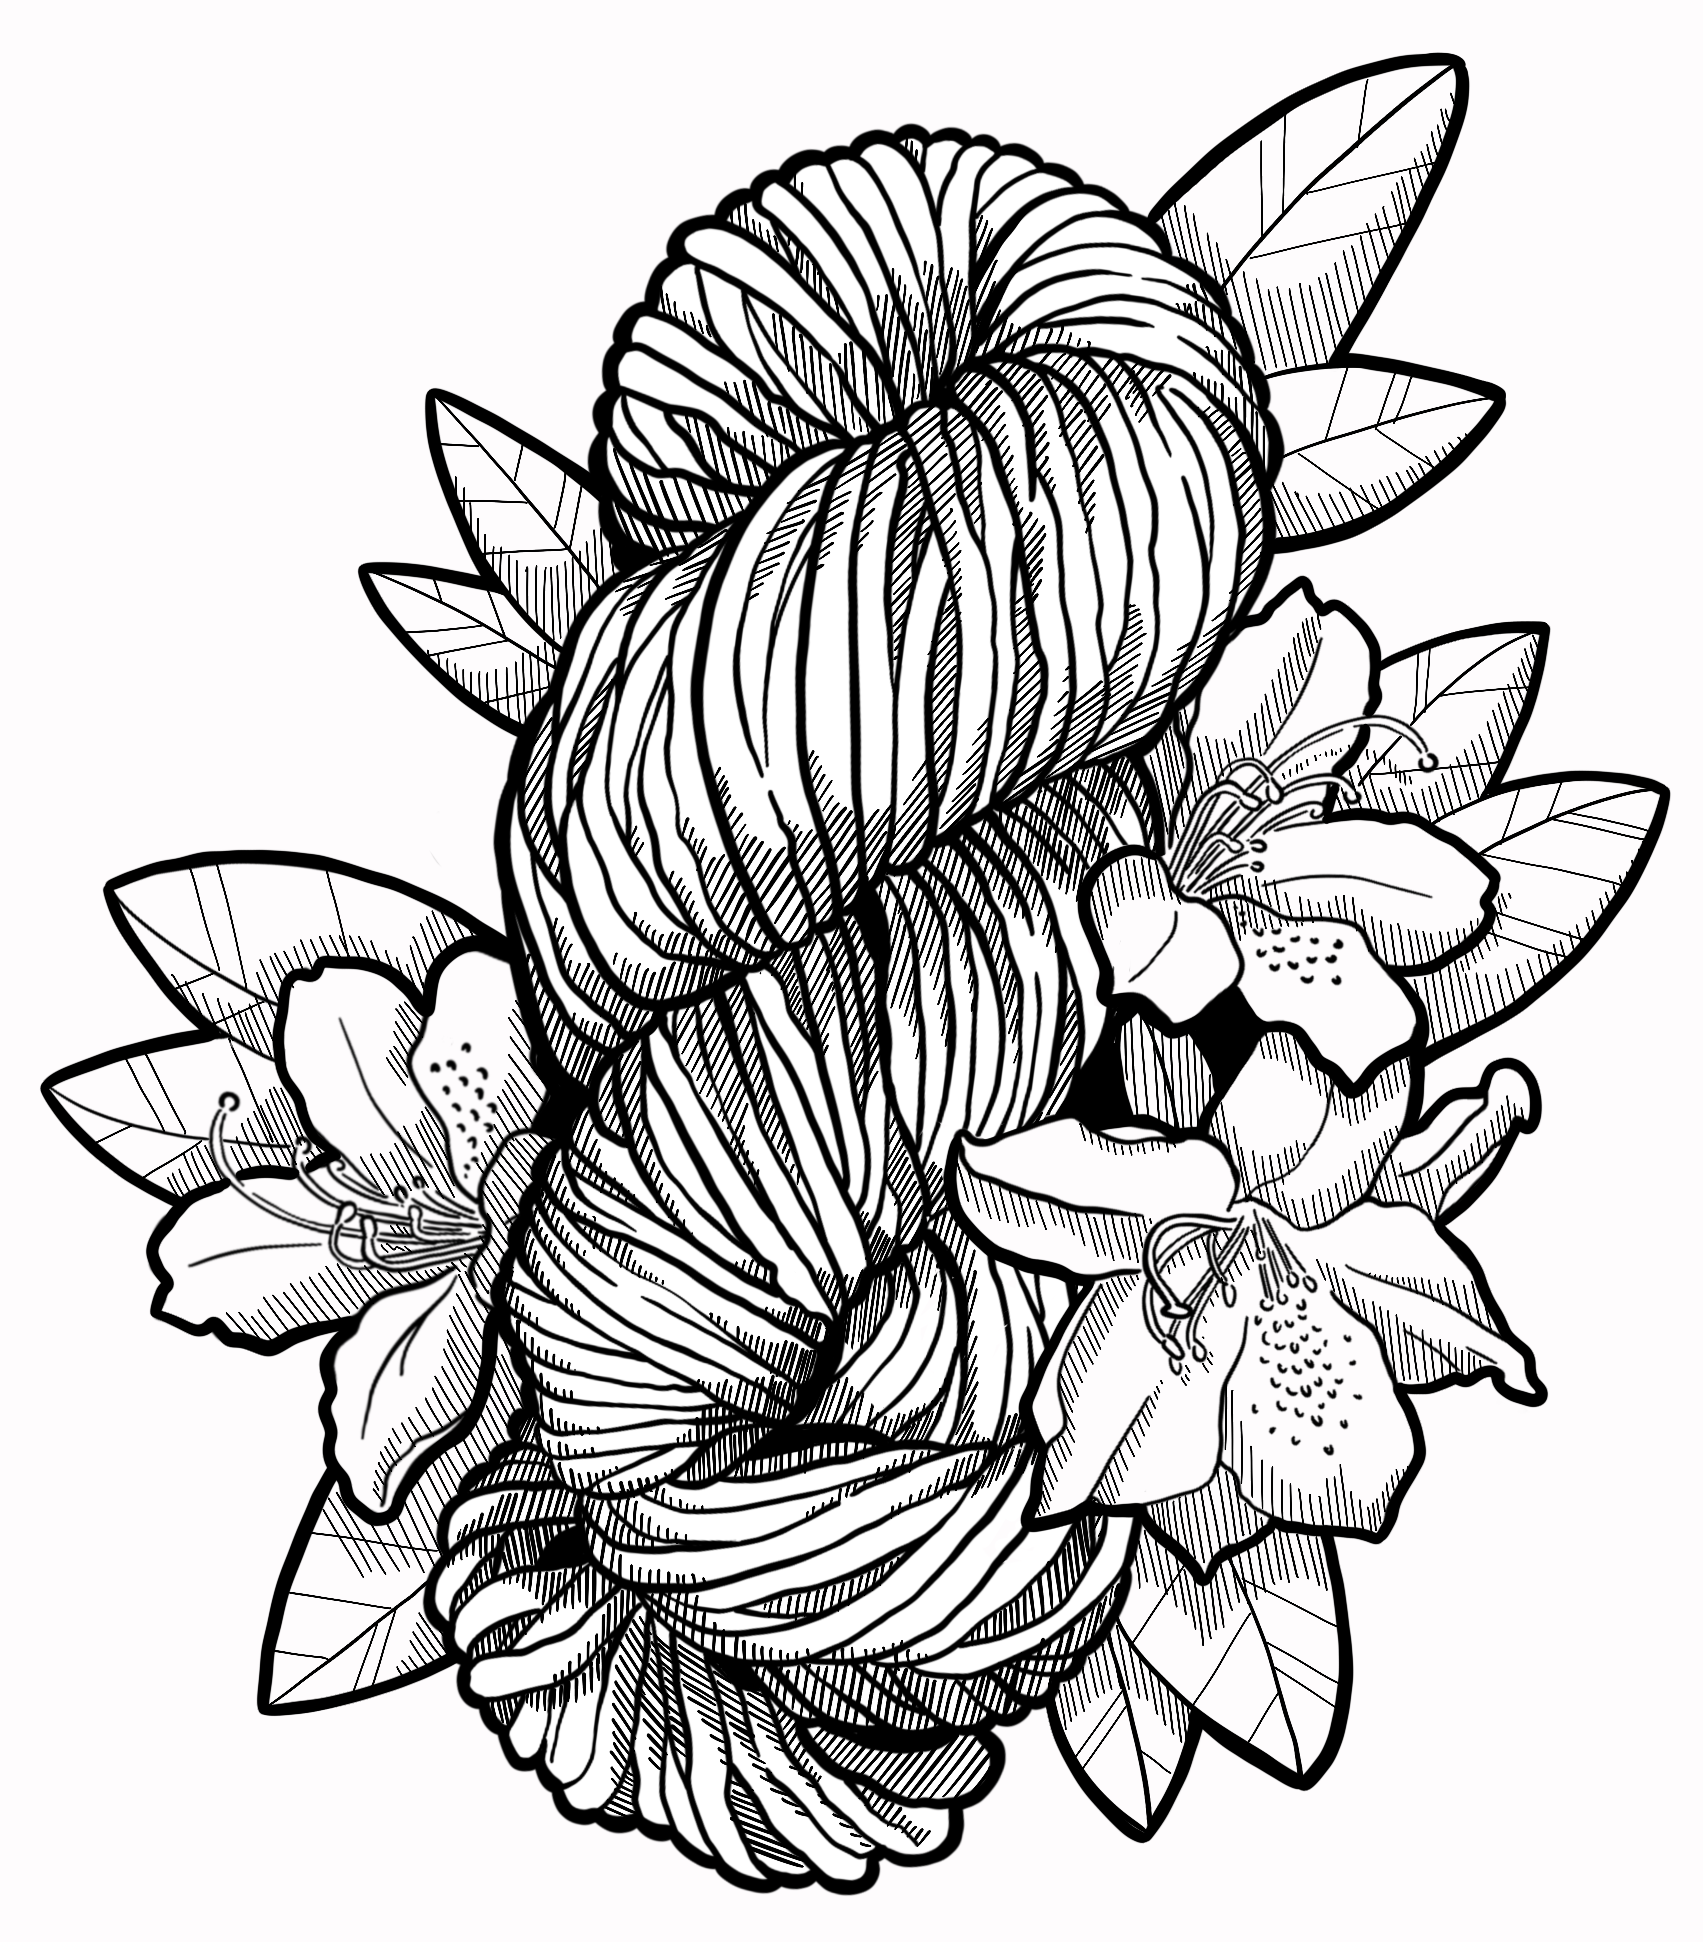 Temporary Knitting Tattoo - Yarn & Florals